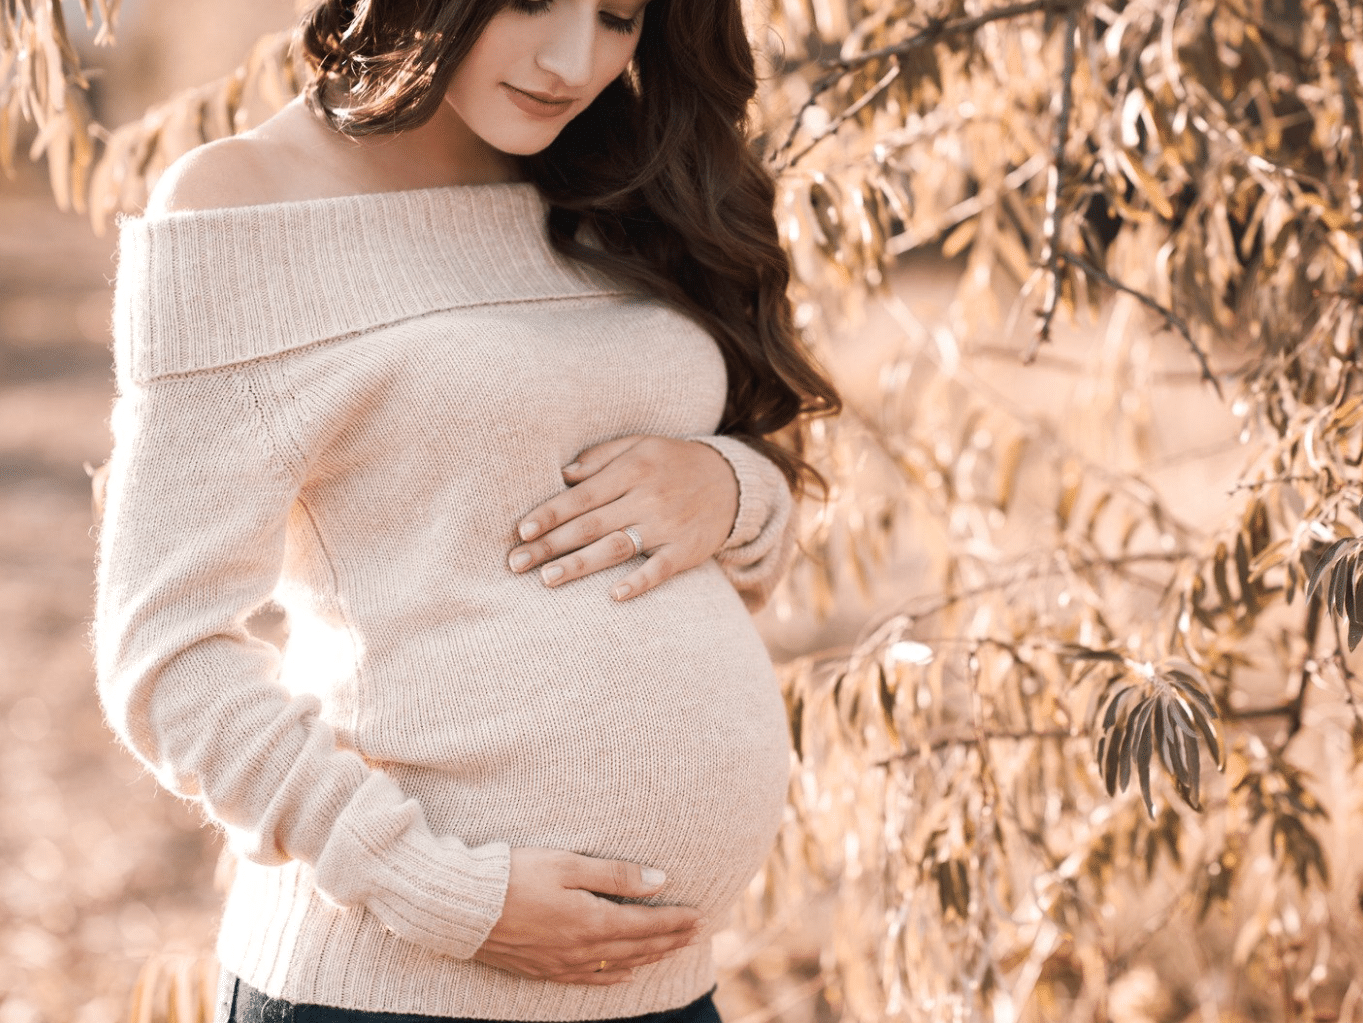 Woman doing a maternity photo shoot